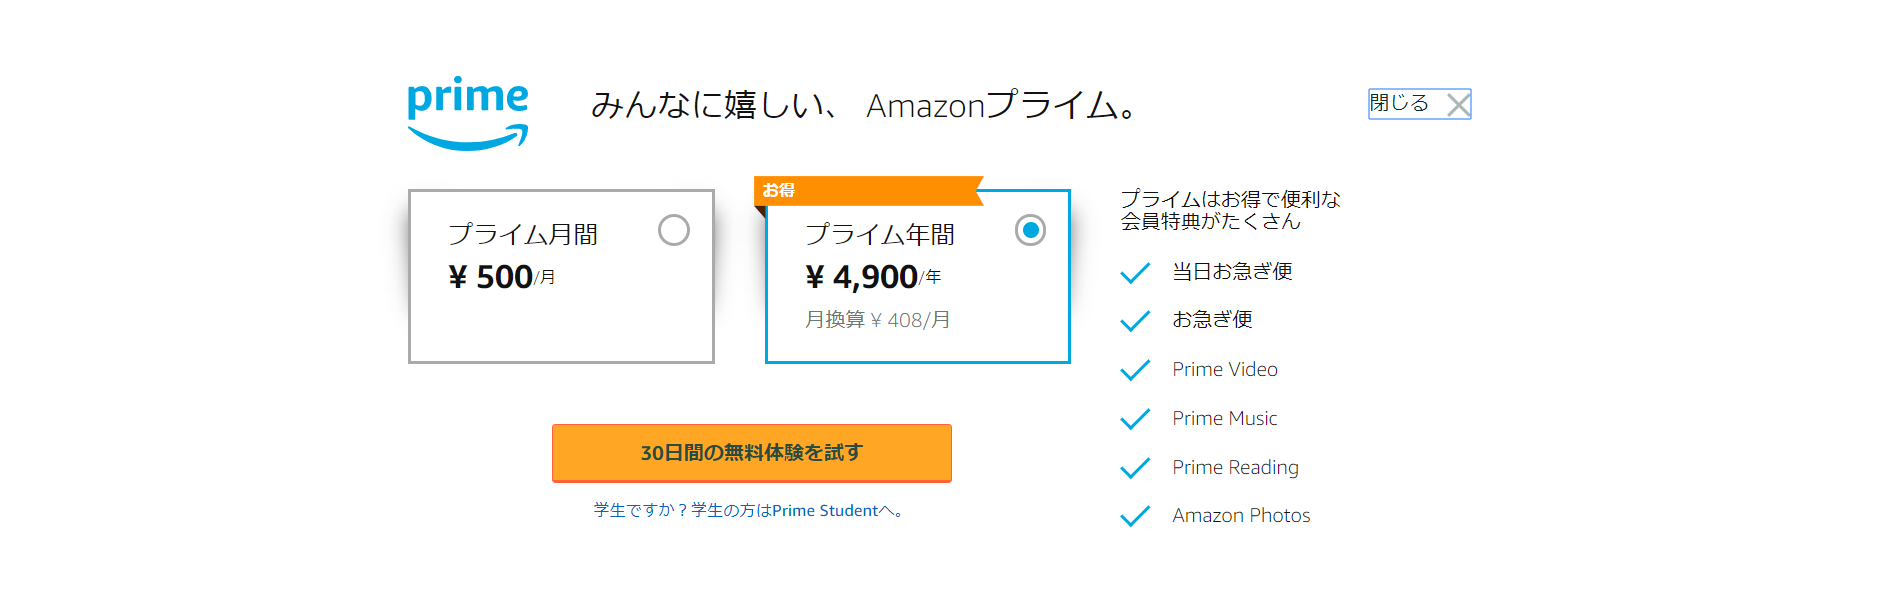 Amazonプライムの会員料金